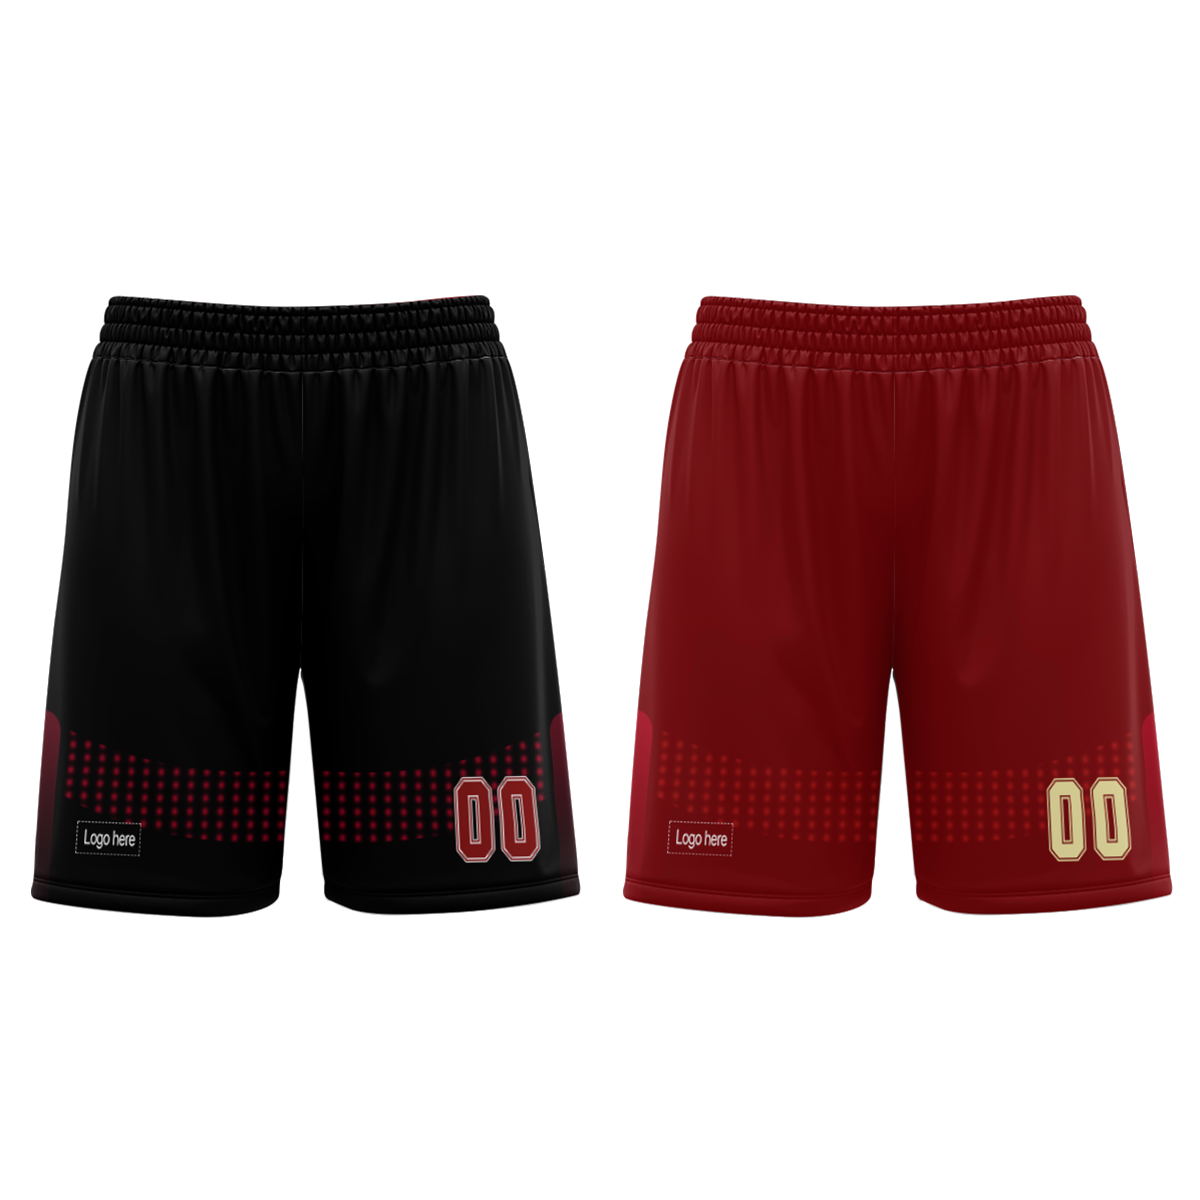 multiple-design-reversible-basketball-jersey-team-set-your-own-print-men-kids-youth-suit-custom-logo-basketball-uniform-jersey-at-cj-pod-7